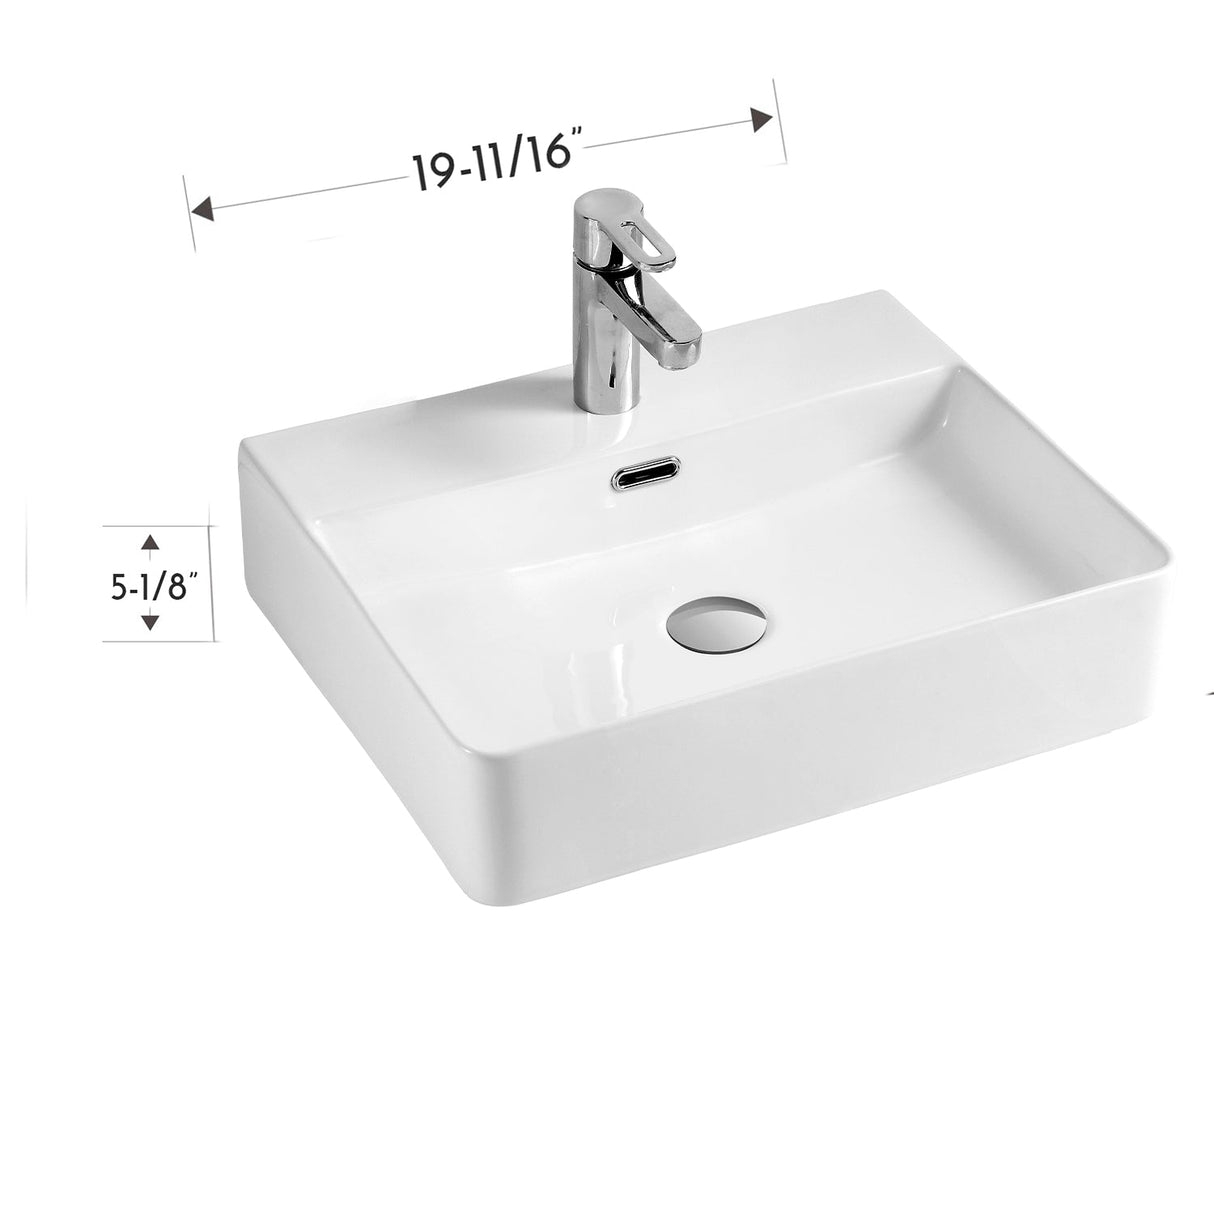 DAX Ceramic Rectangular Bathroom Vessel Basin, 20", White Matte DAX-CL1275-WM